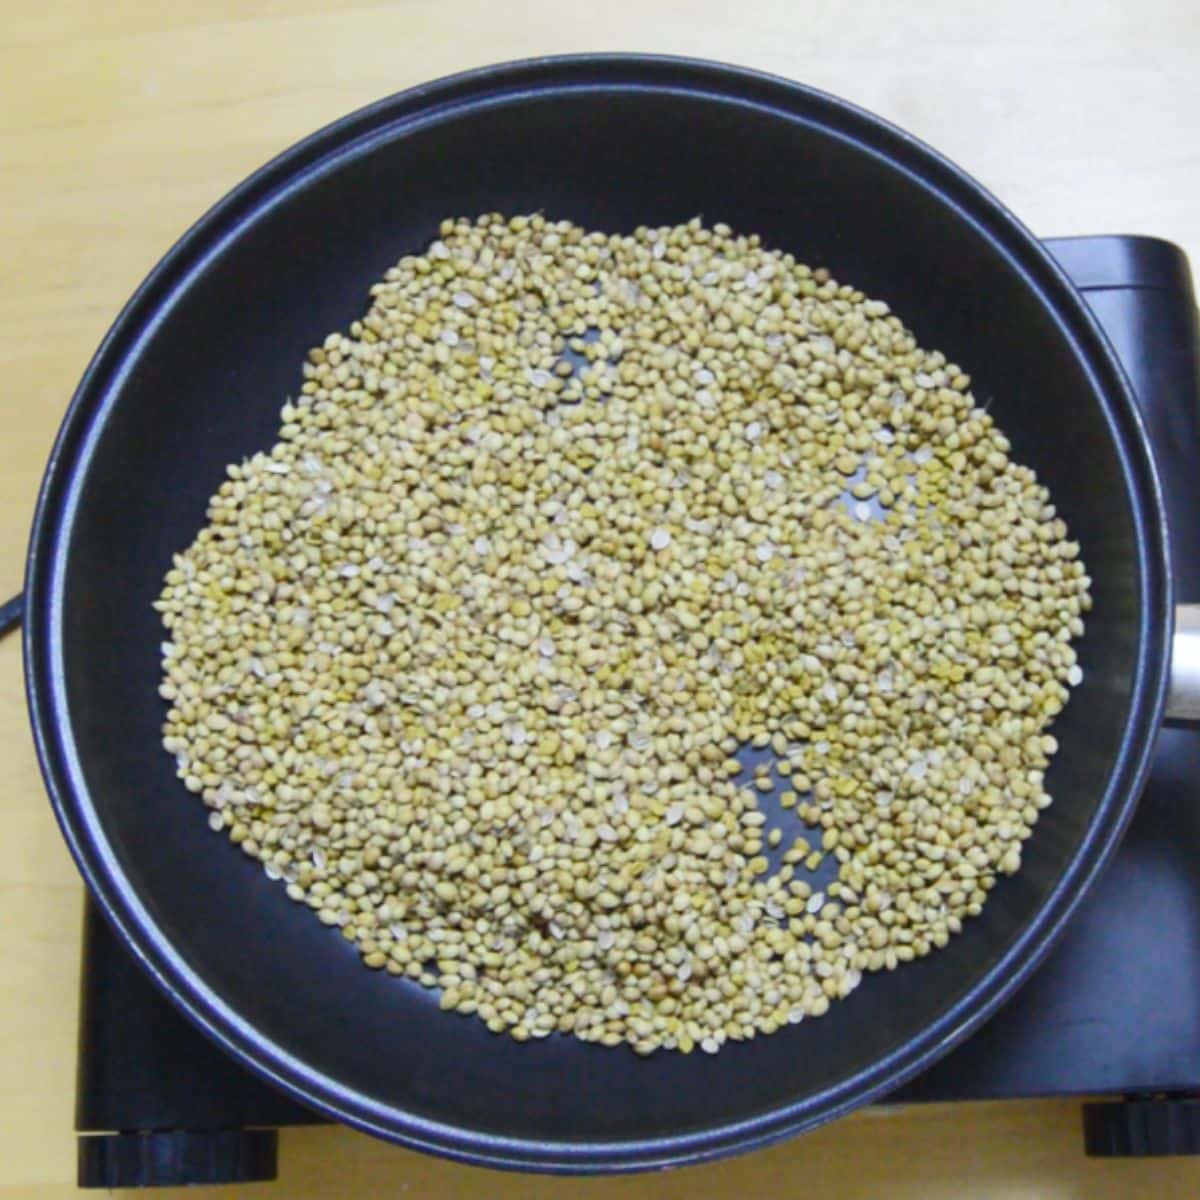 coriander seeds in a black pan placed on black burner.